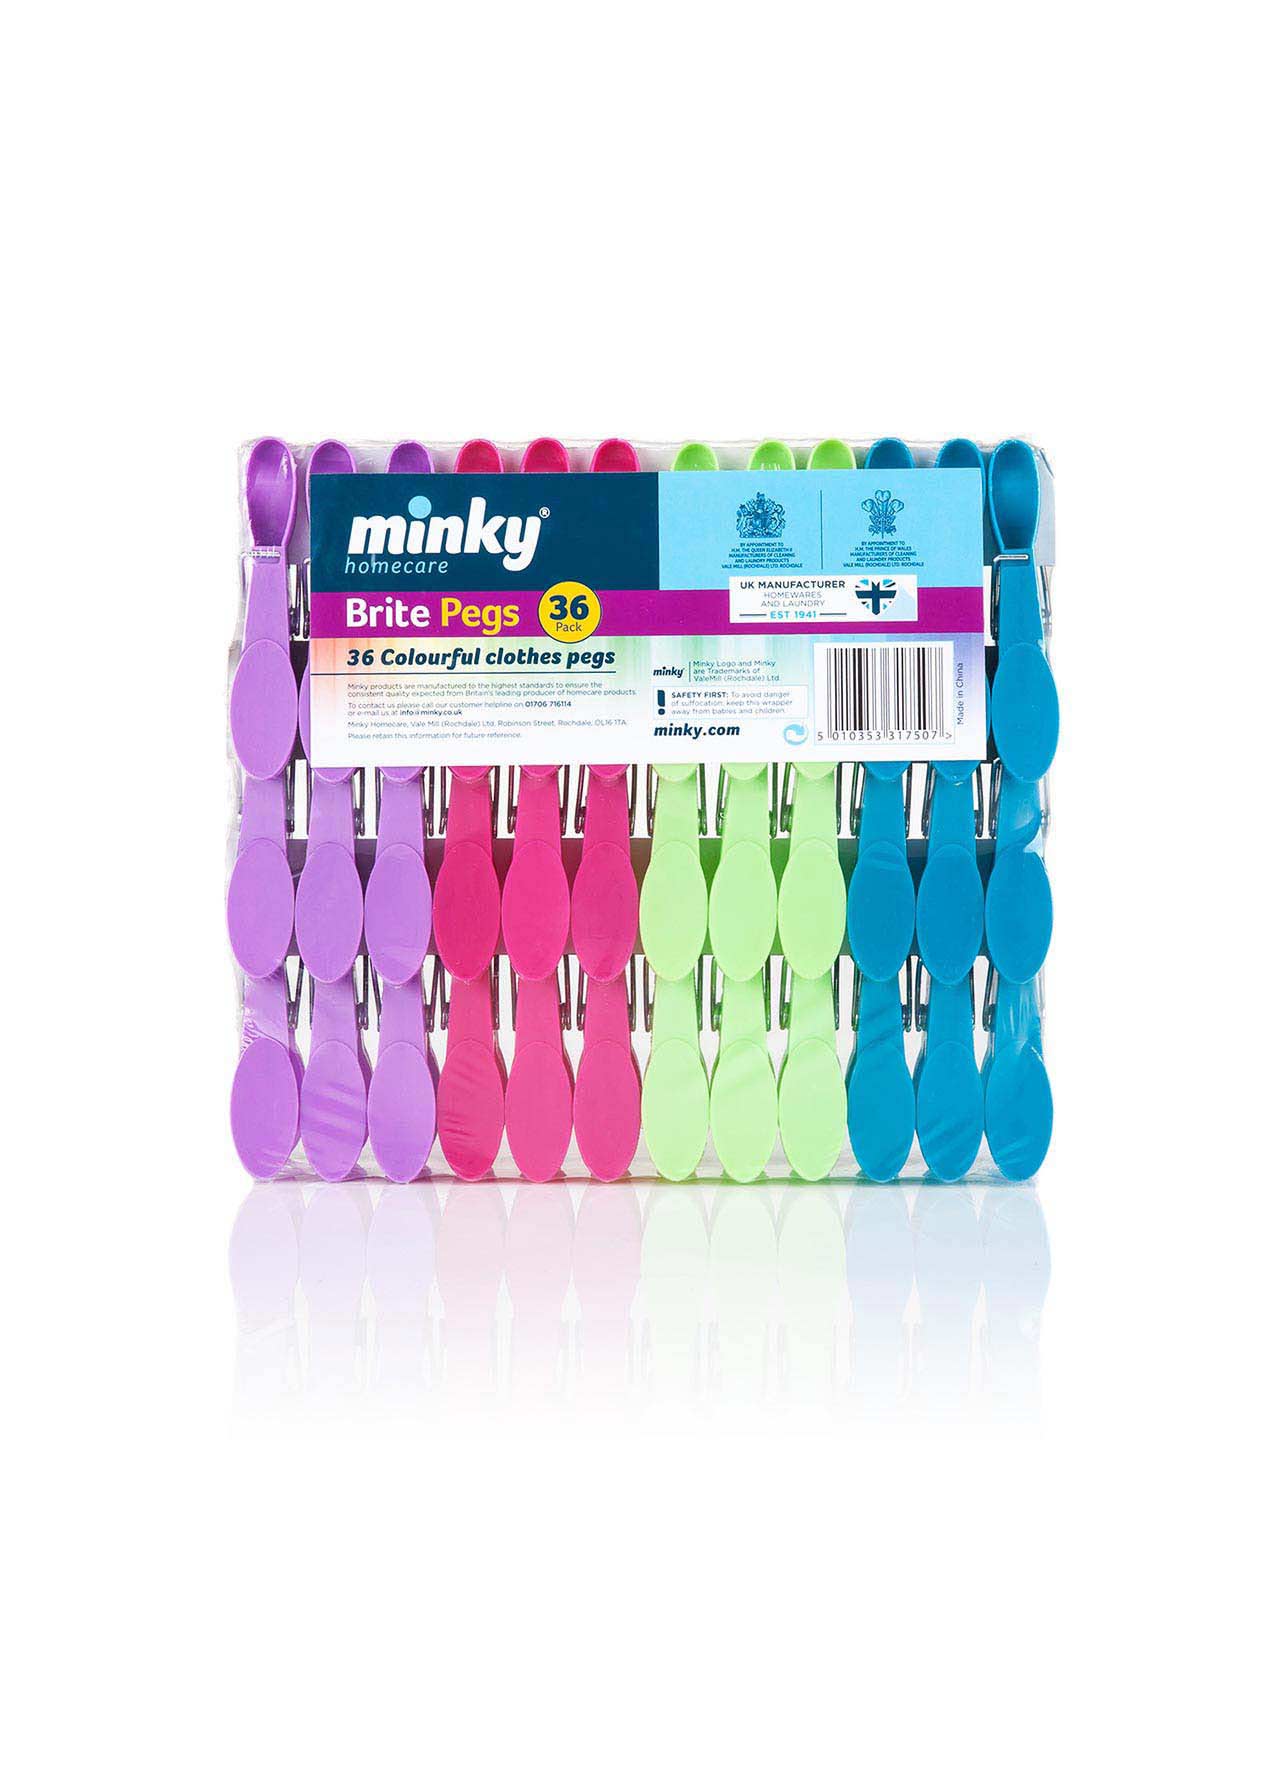 Minky Brites Pegs X 36 Pack by Minky